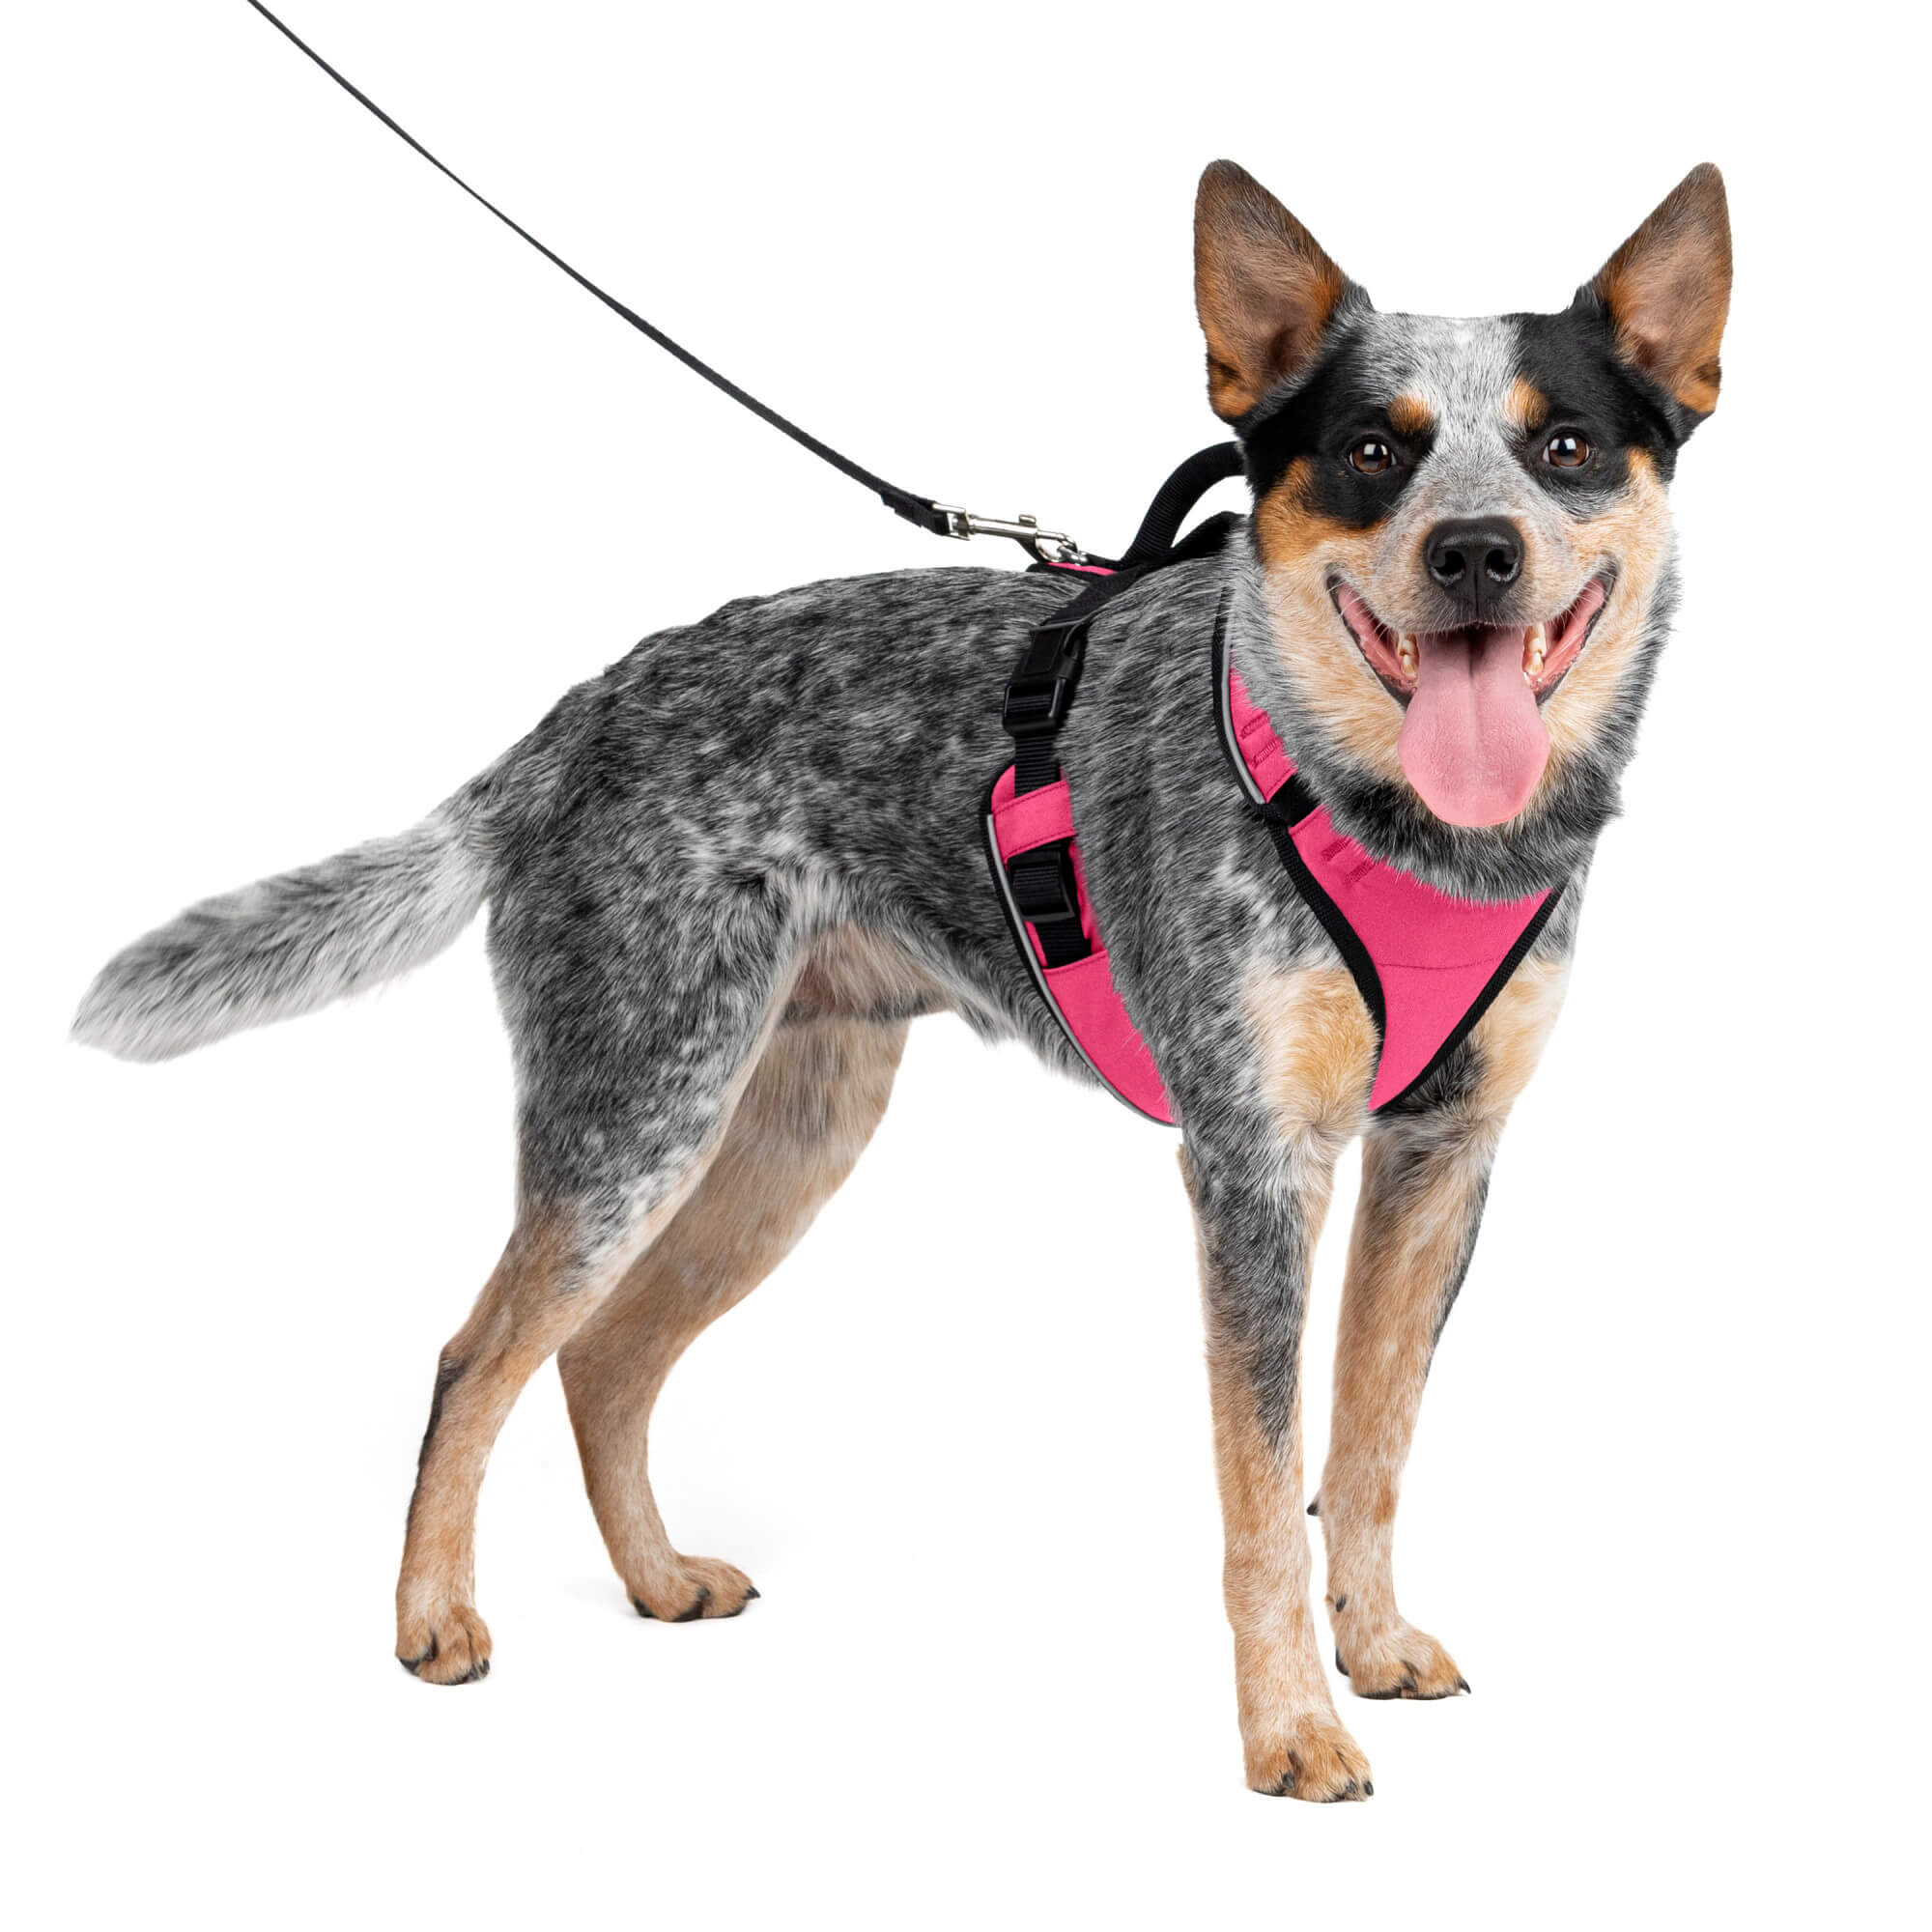 Dog wearing pink petsafe easysport harness in medium